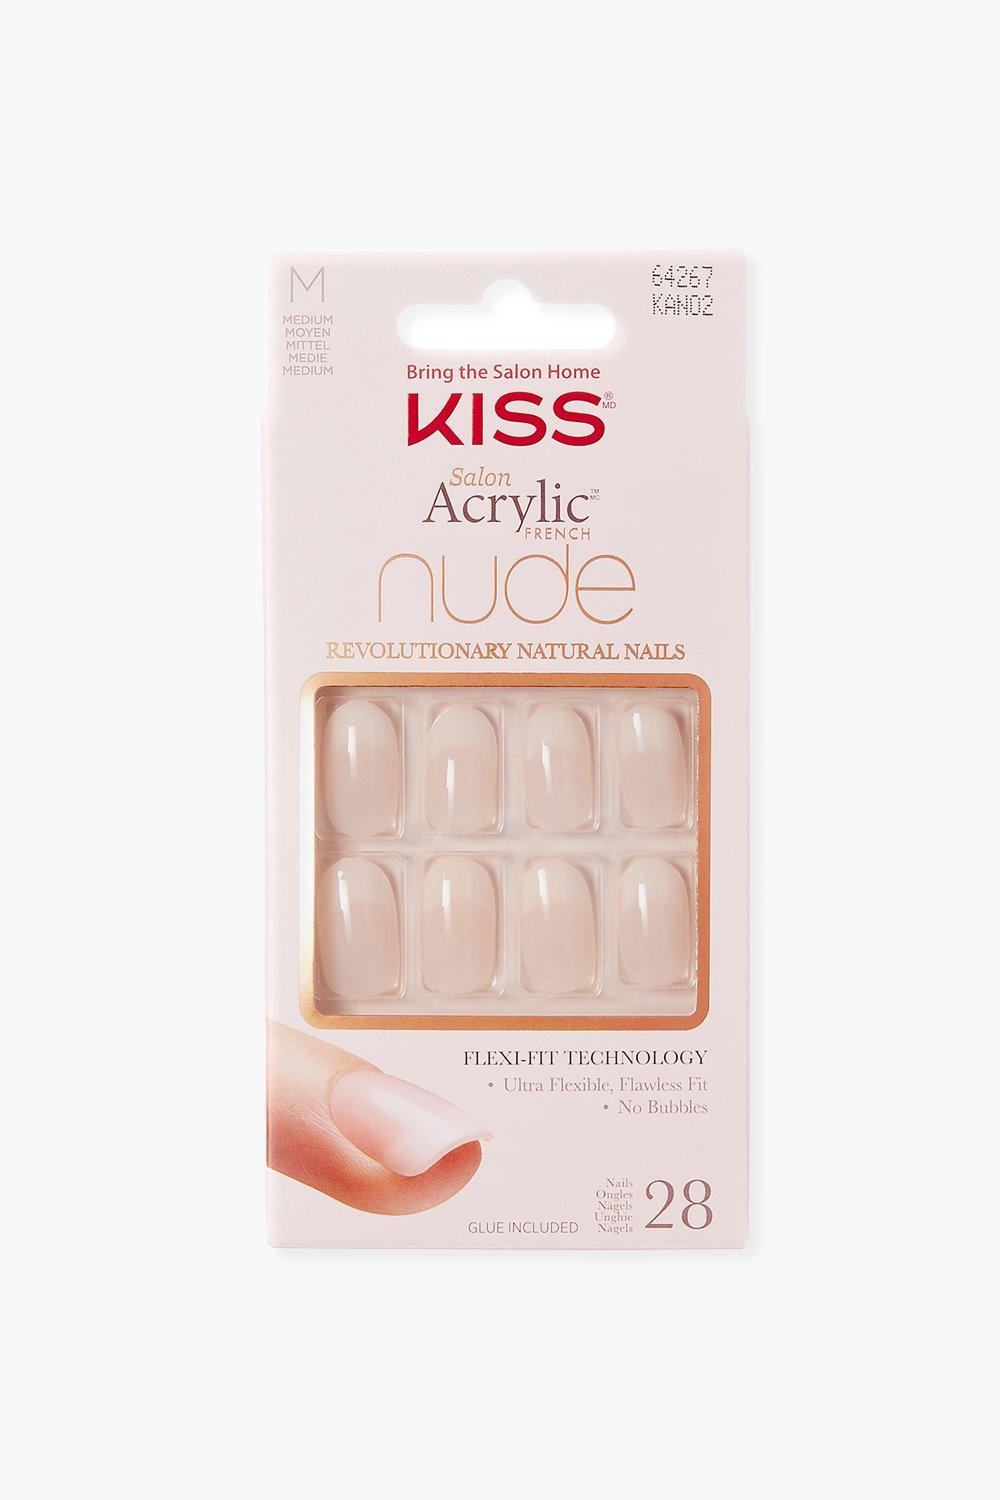 Kiss Salon Acrylic Nude Nails - Graceful, Nude